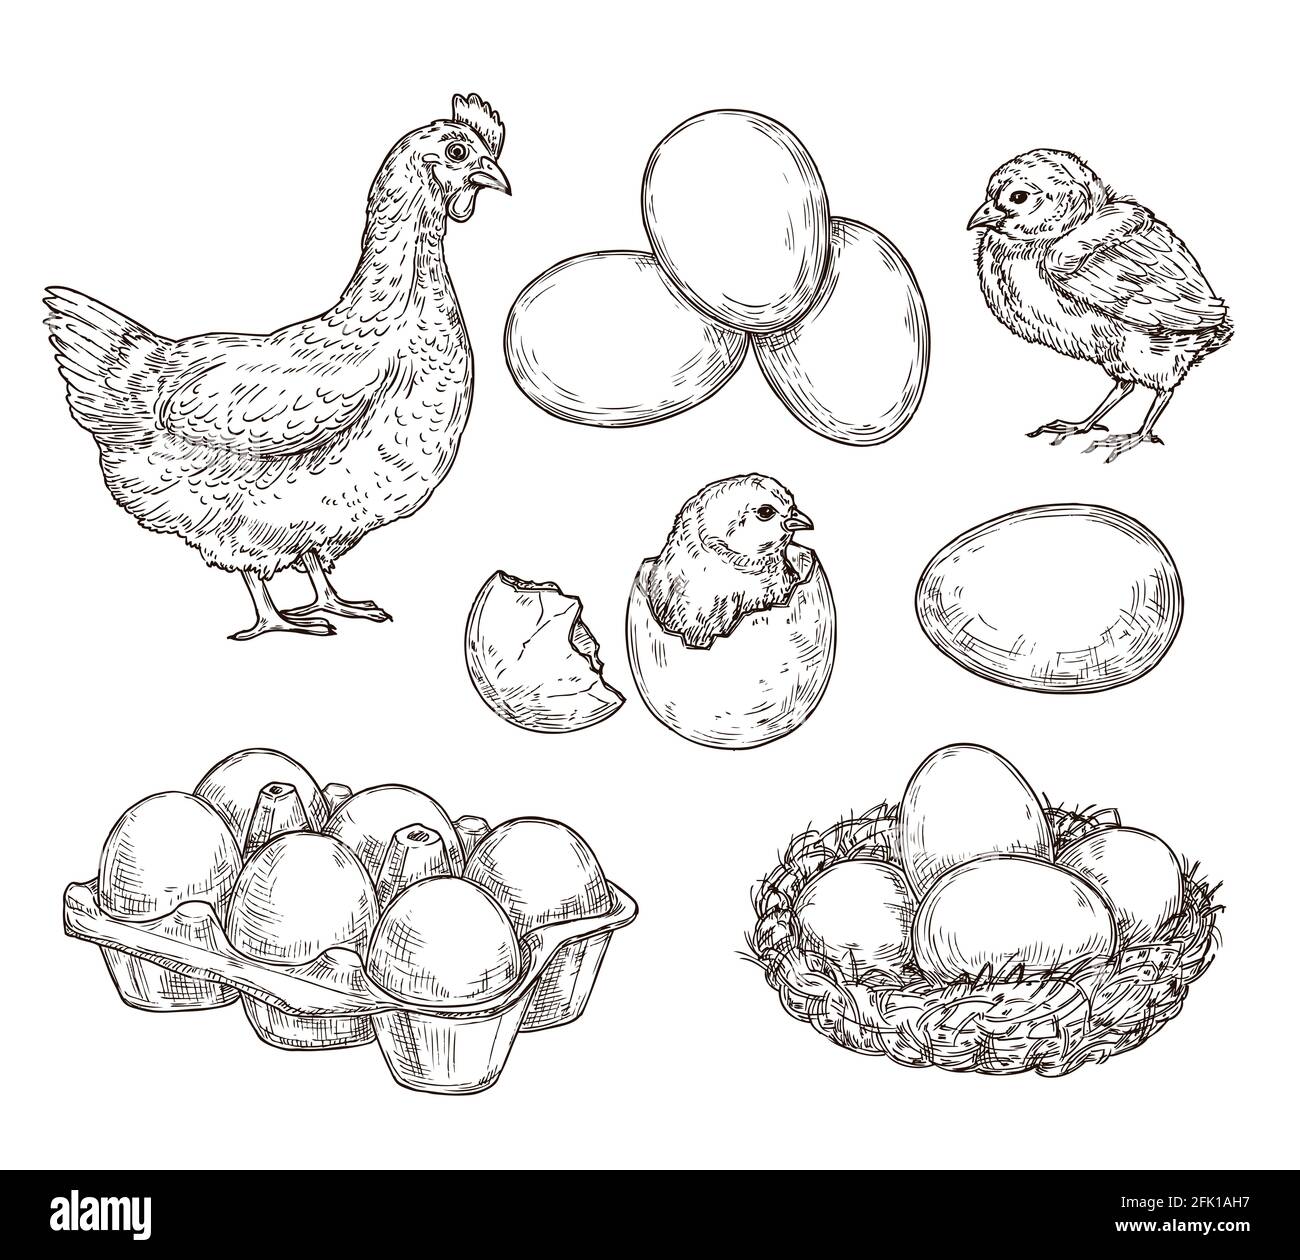 Chicken Sketches by Nambroth on DeviantArt